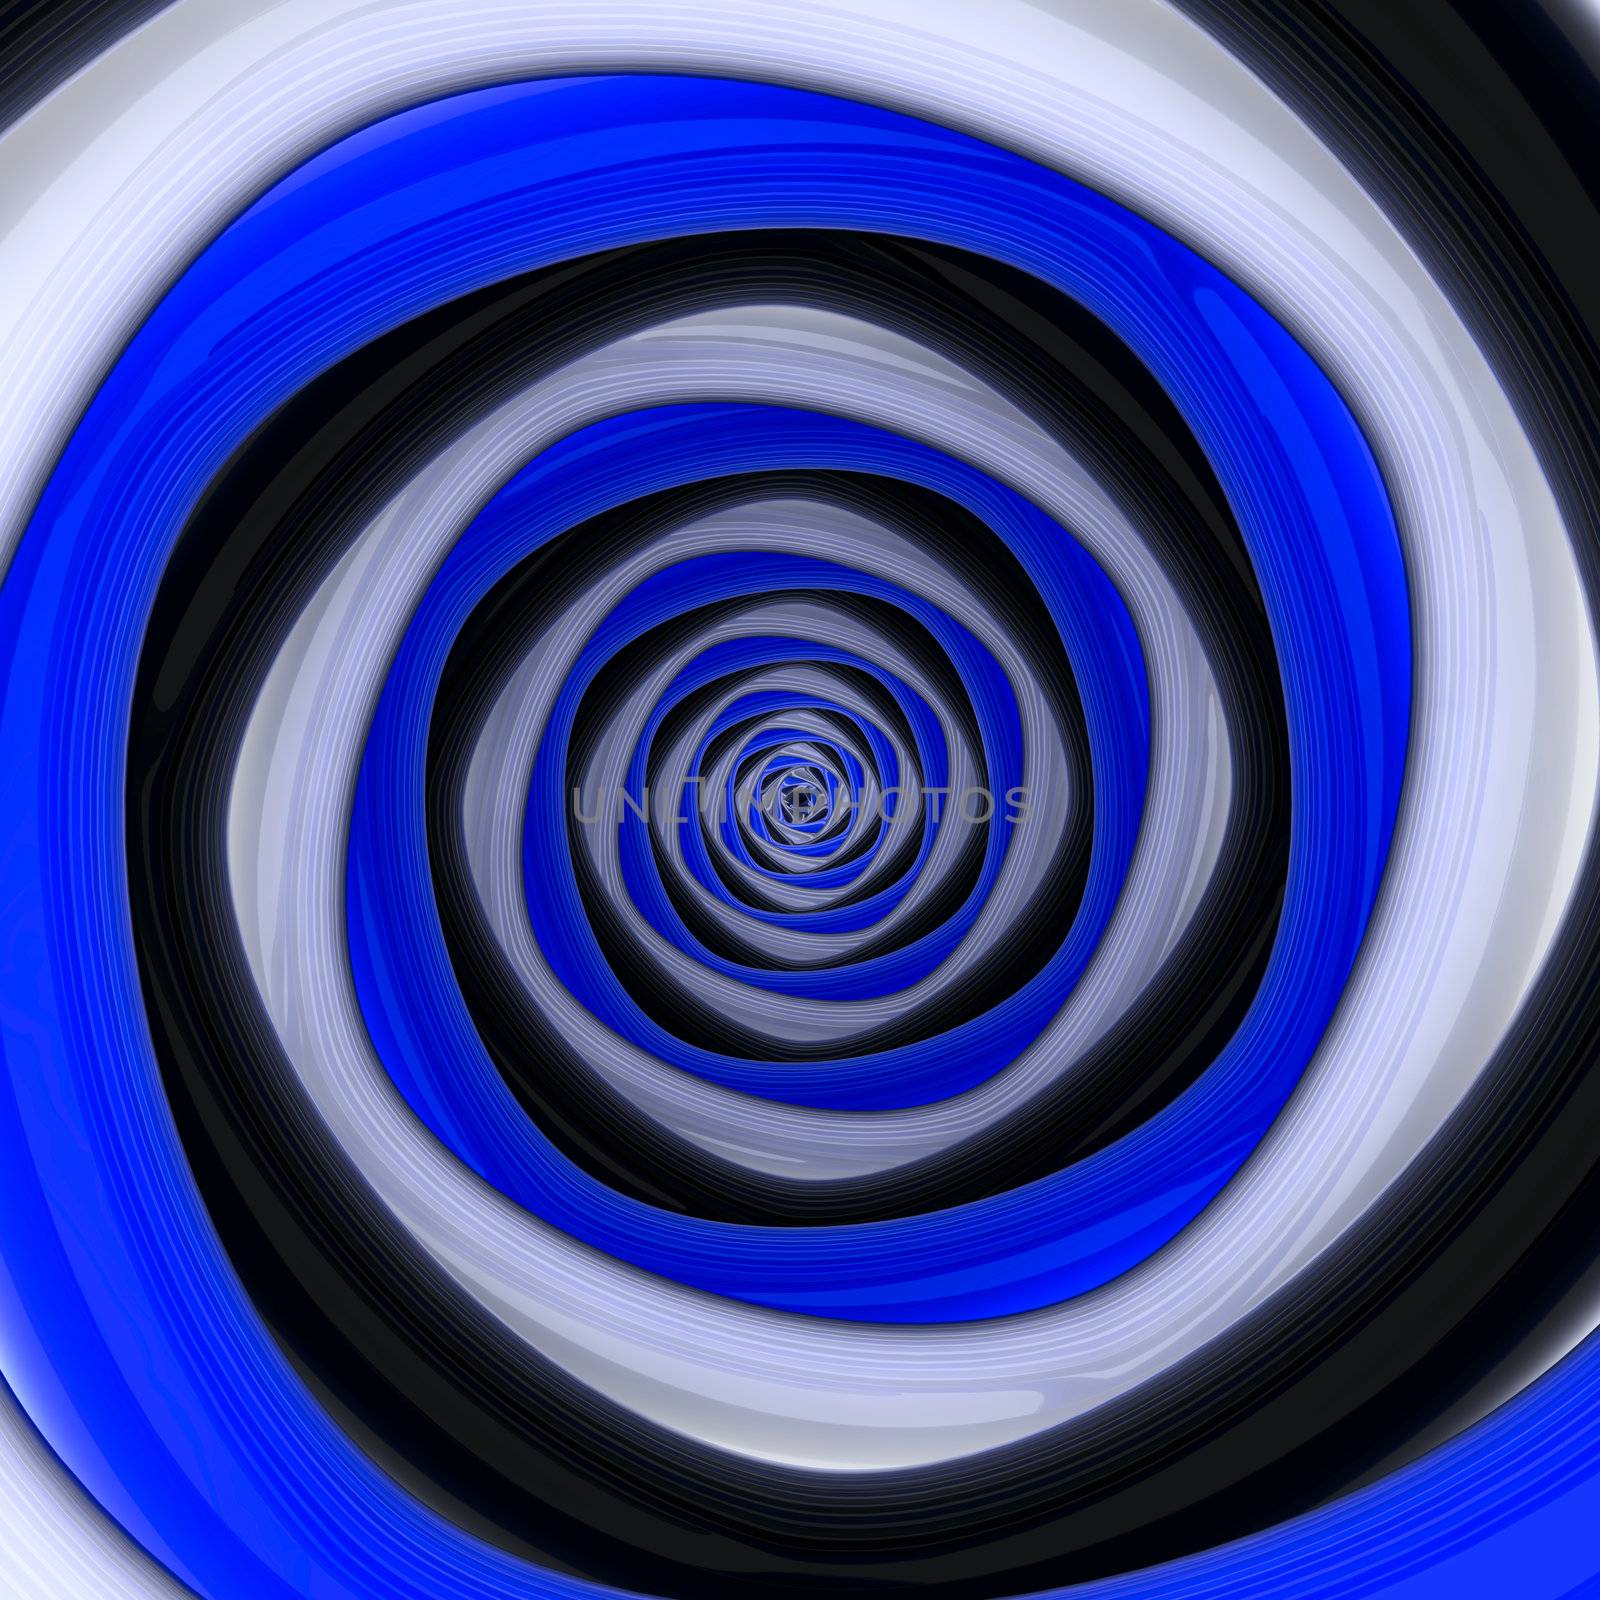 Square vortex of black, white, blue colors